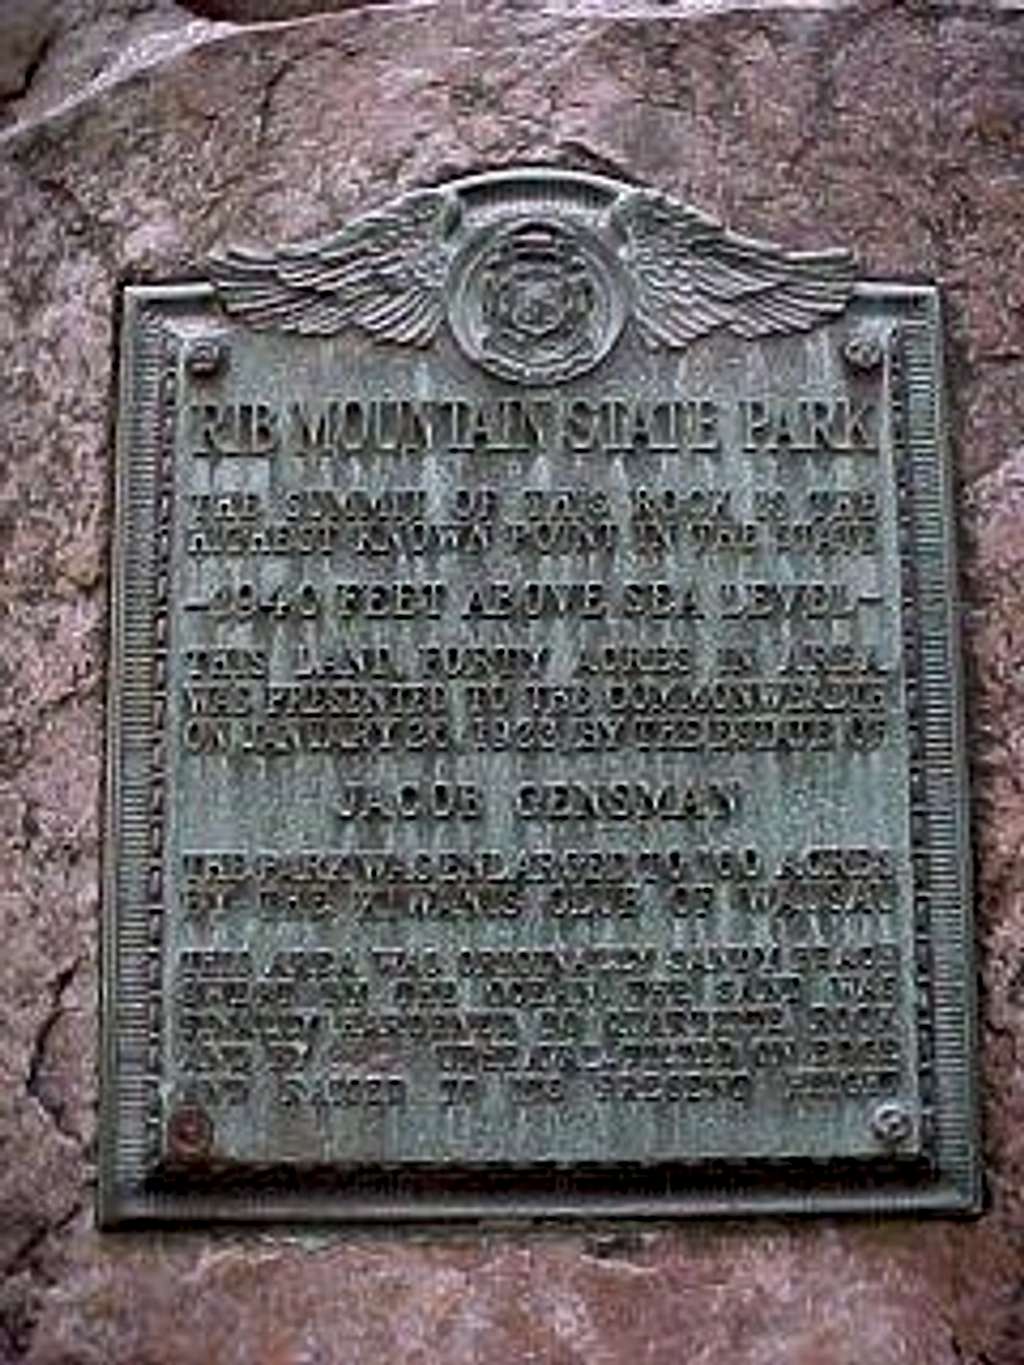 Rib Mountain summit plaque